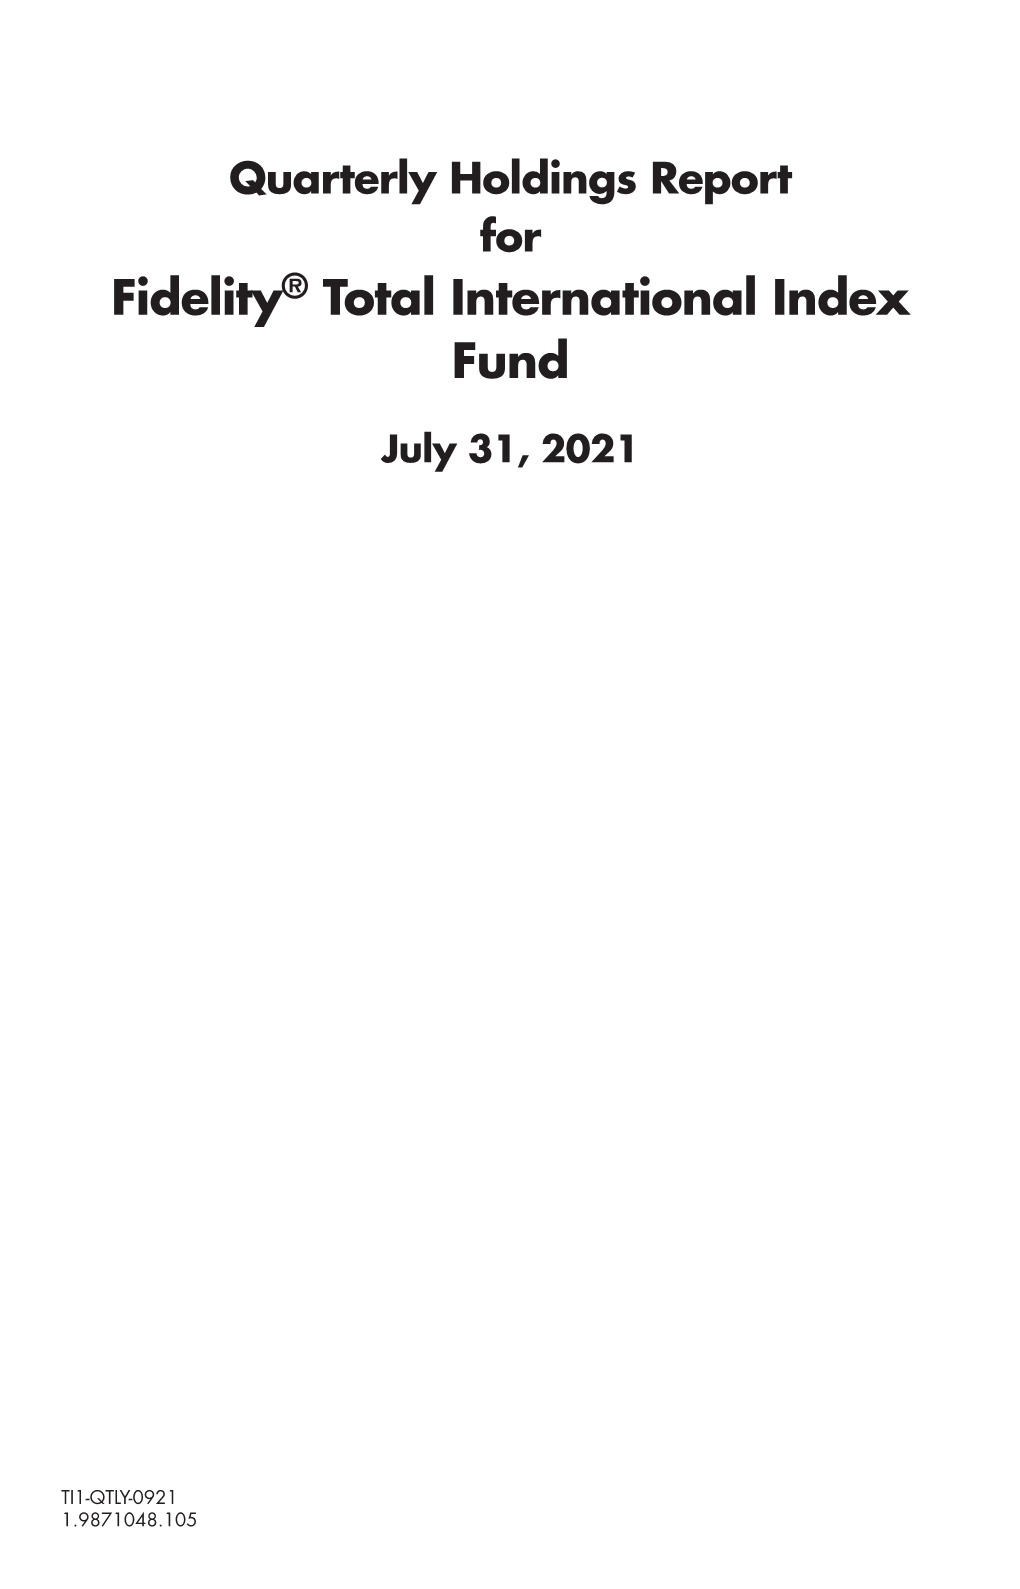 Fidelity® Total International Index Fund